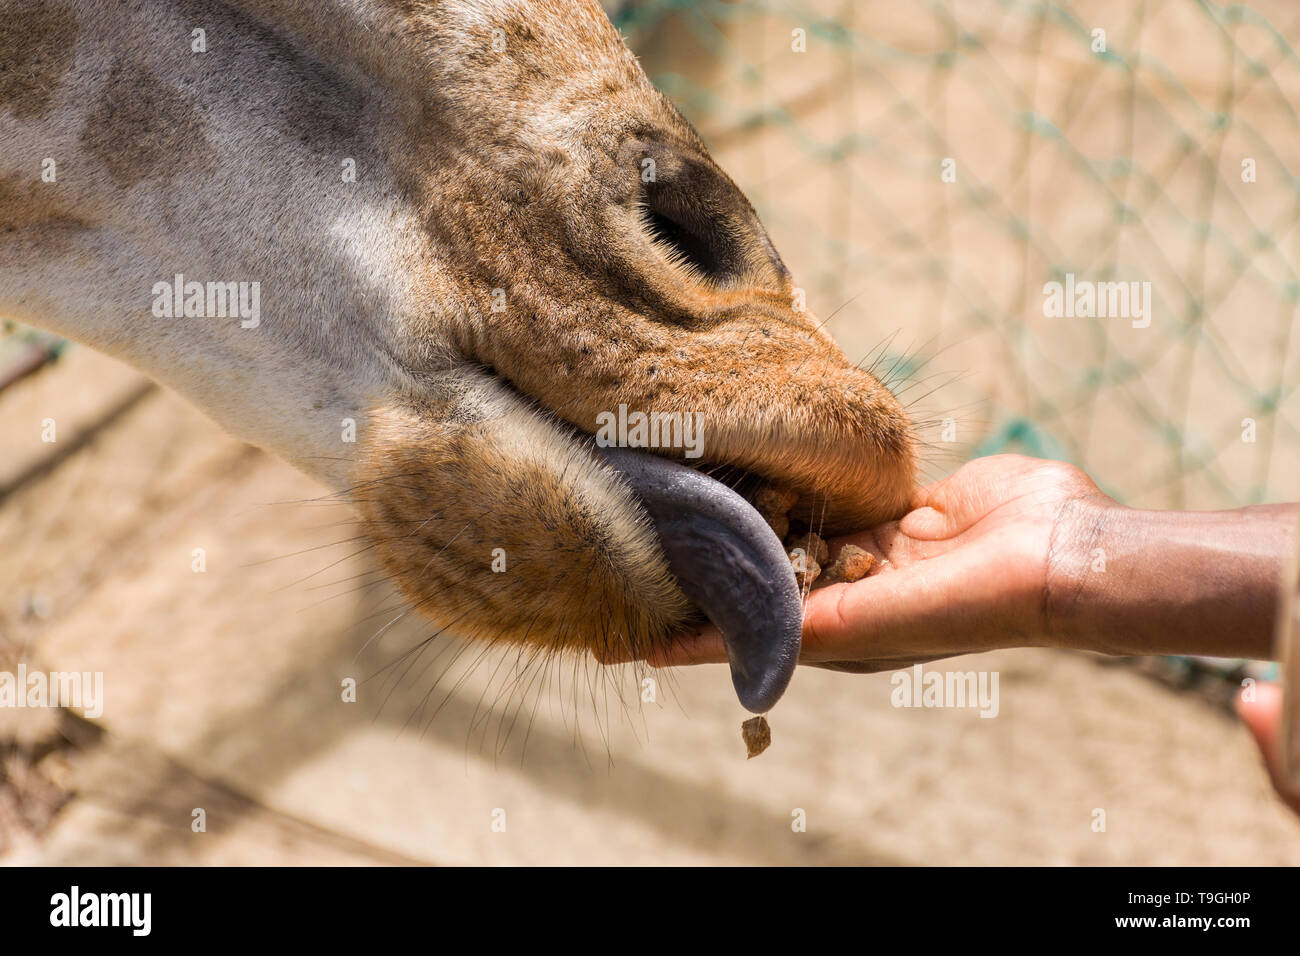 Rothschild's giraffe (Giraffa camelopardalis rothschildi) being hand fed food pellets Stock Photo